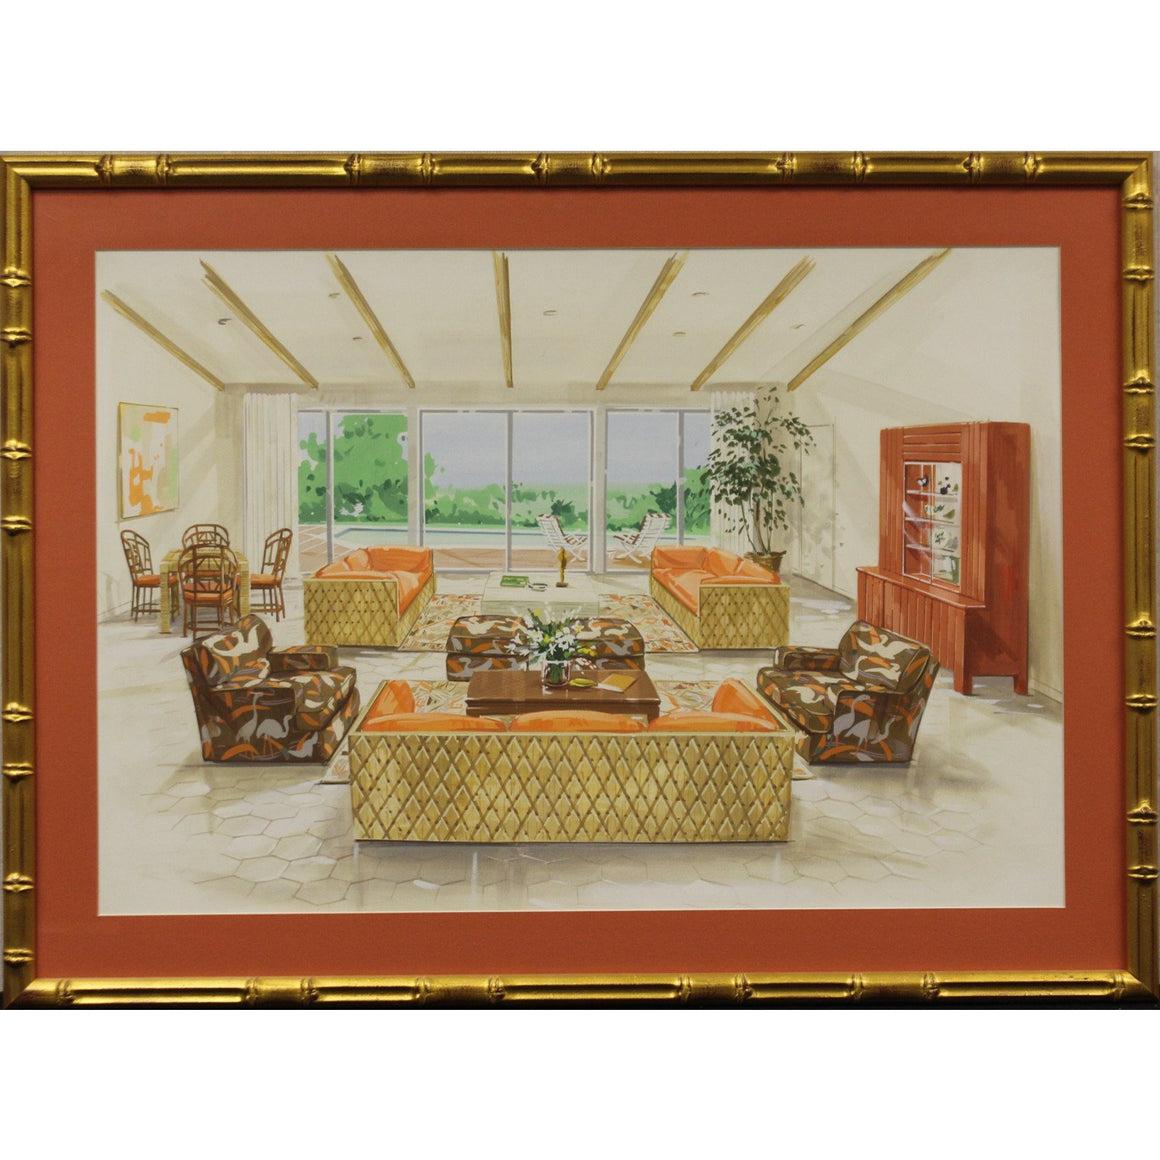 Tropical-Inspired Retro Living Room